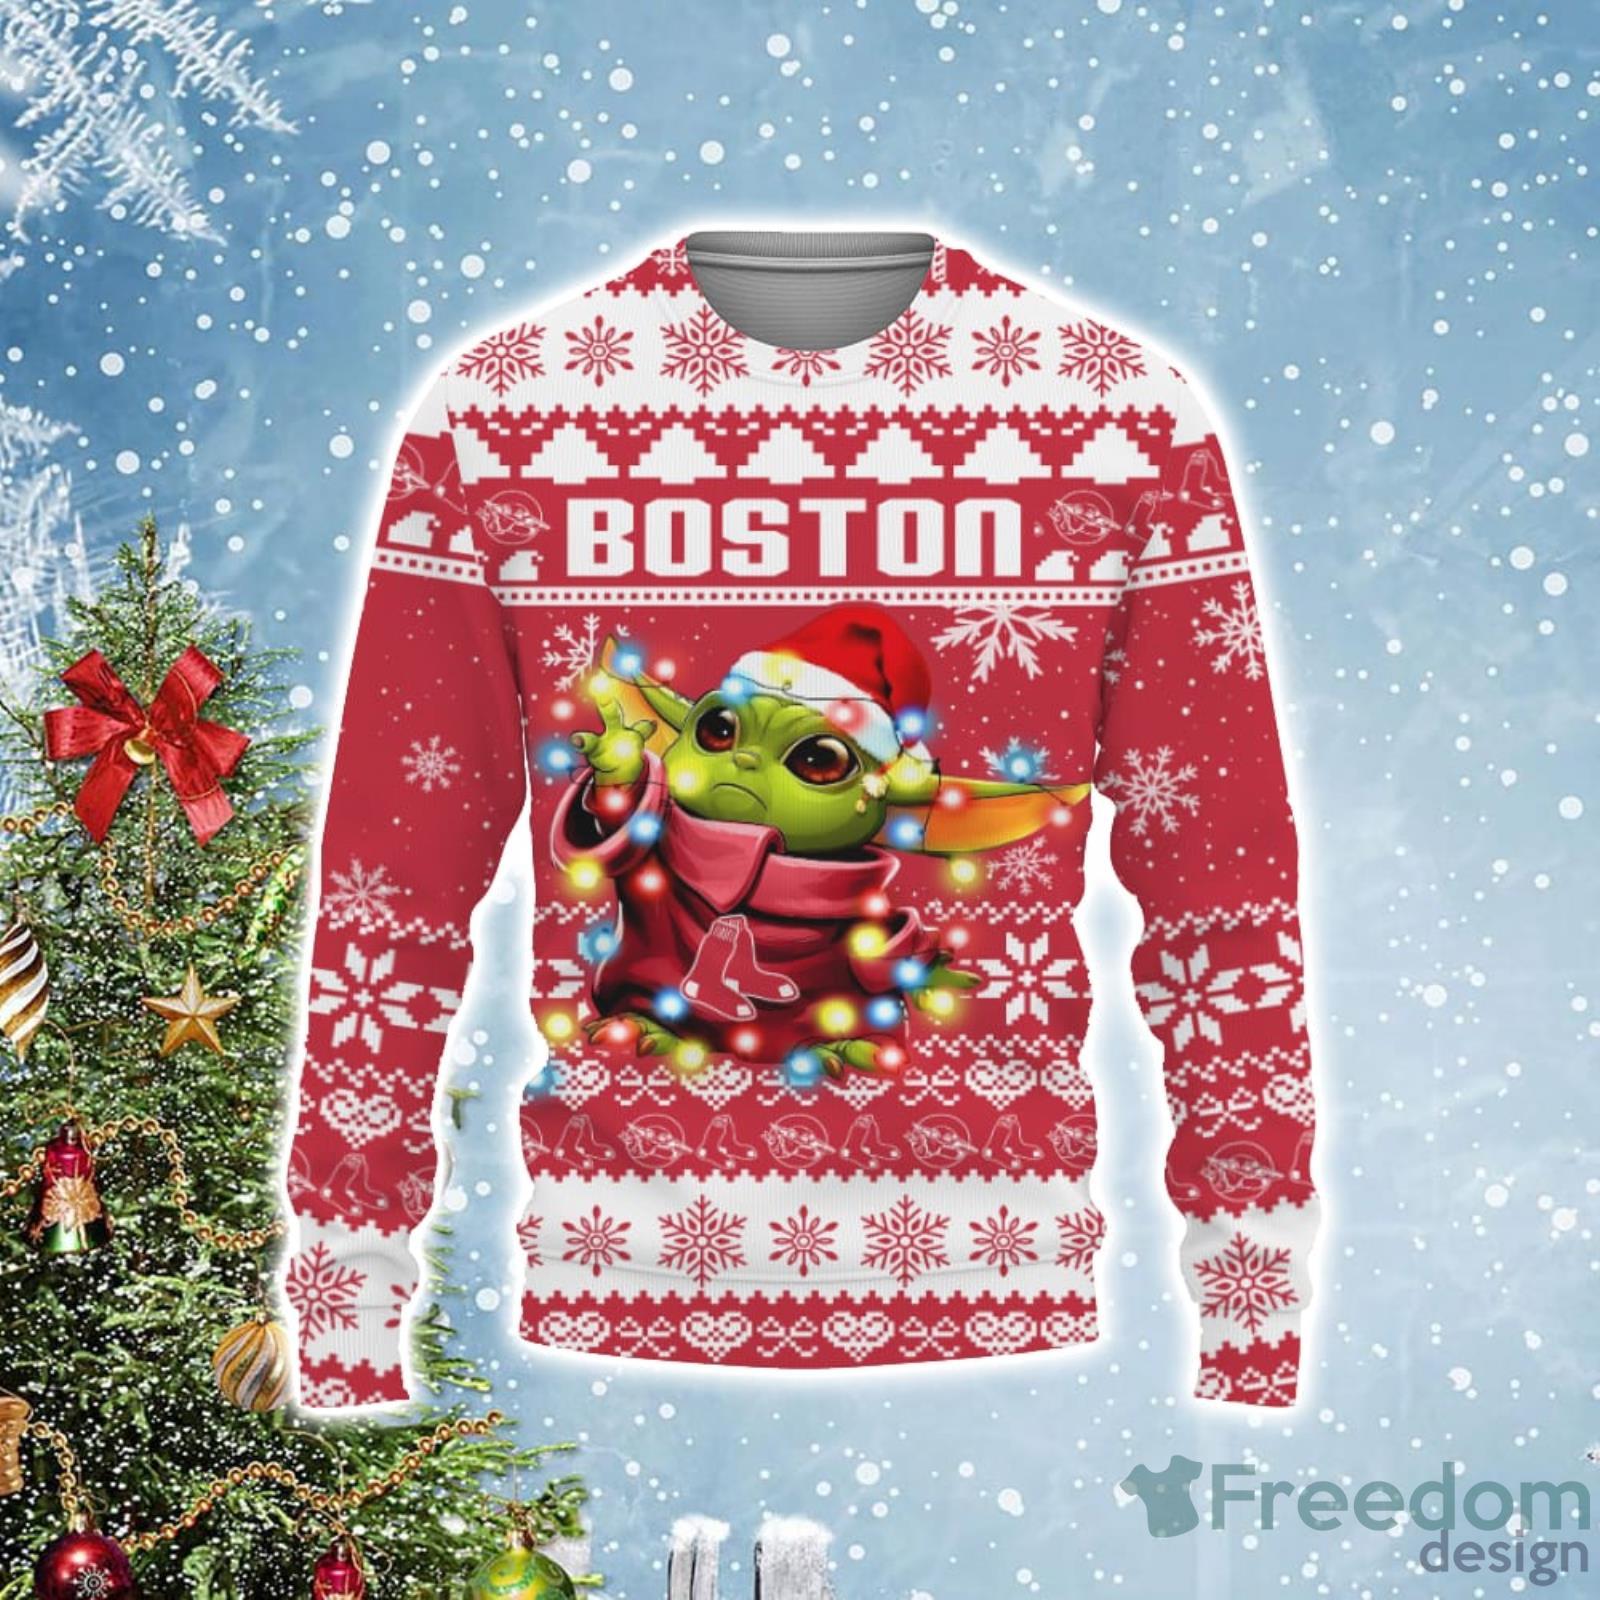 Boston Red Sox Baby Yoda Star Wars Ugly Christmas Sweater - Freedomdesign